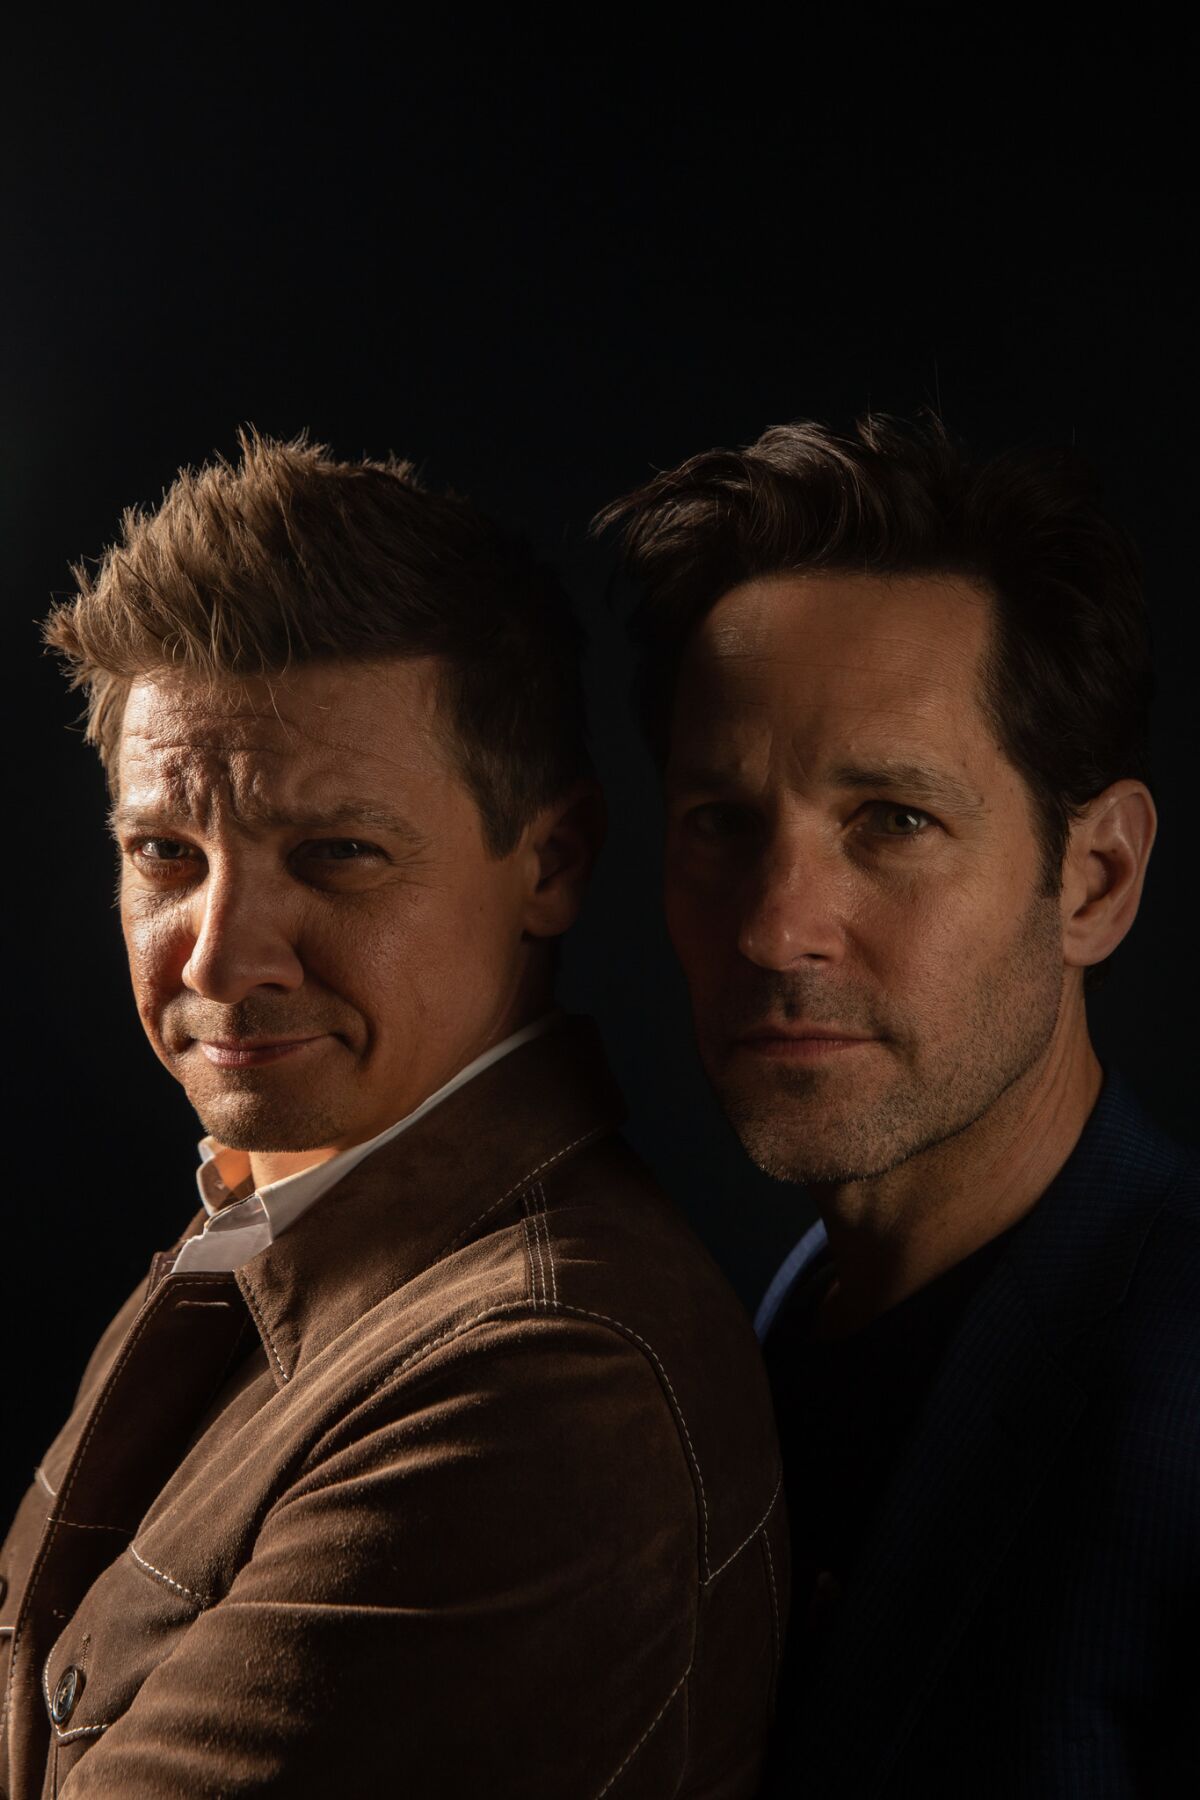 Jeremy Renner and Paul Rudd from the film "Avengers: Endgame."